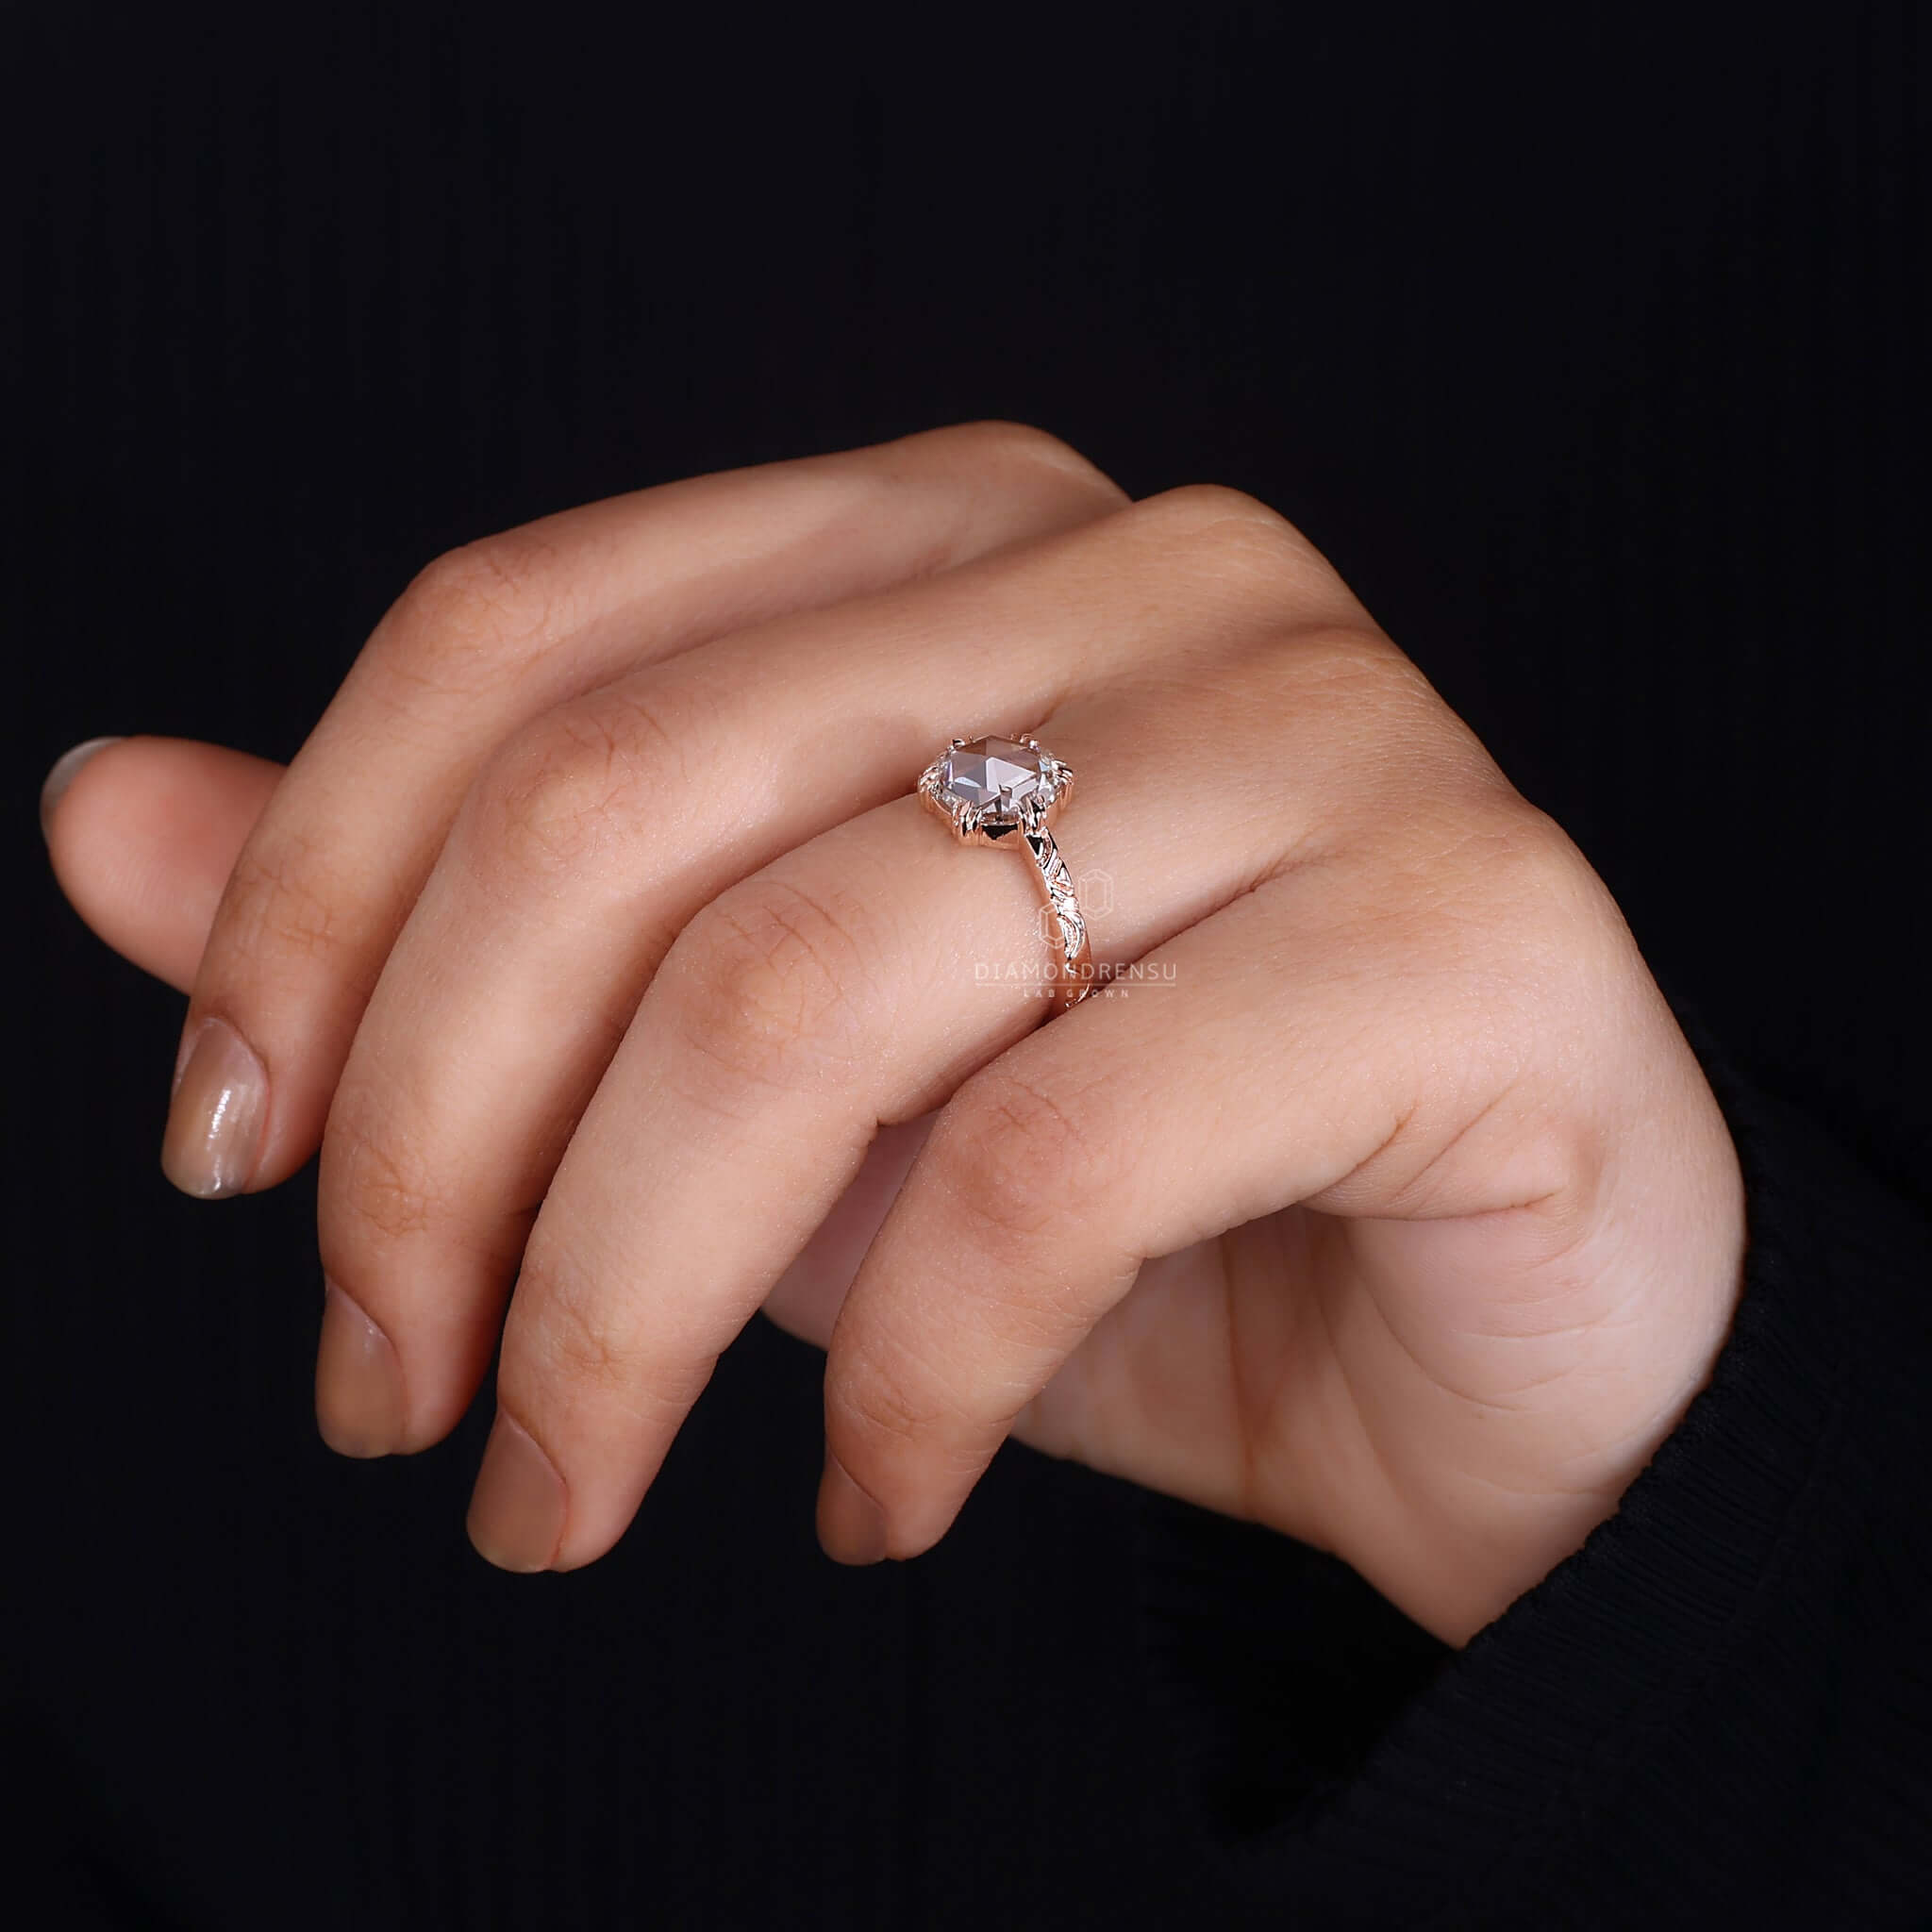 Handmade Jewelry by Diamondrensu - Rose Cut Diamond Ring